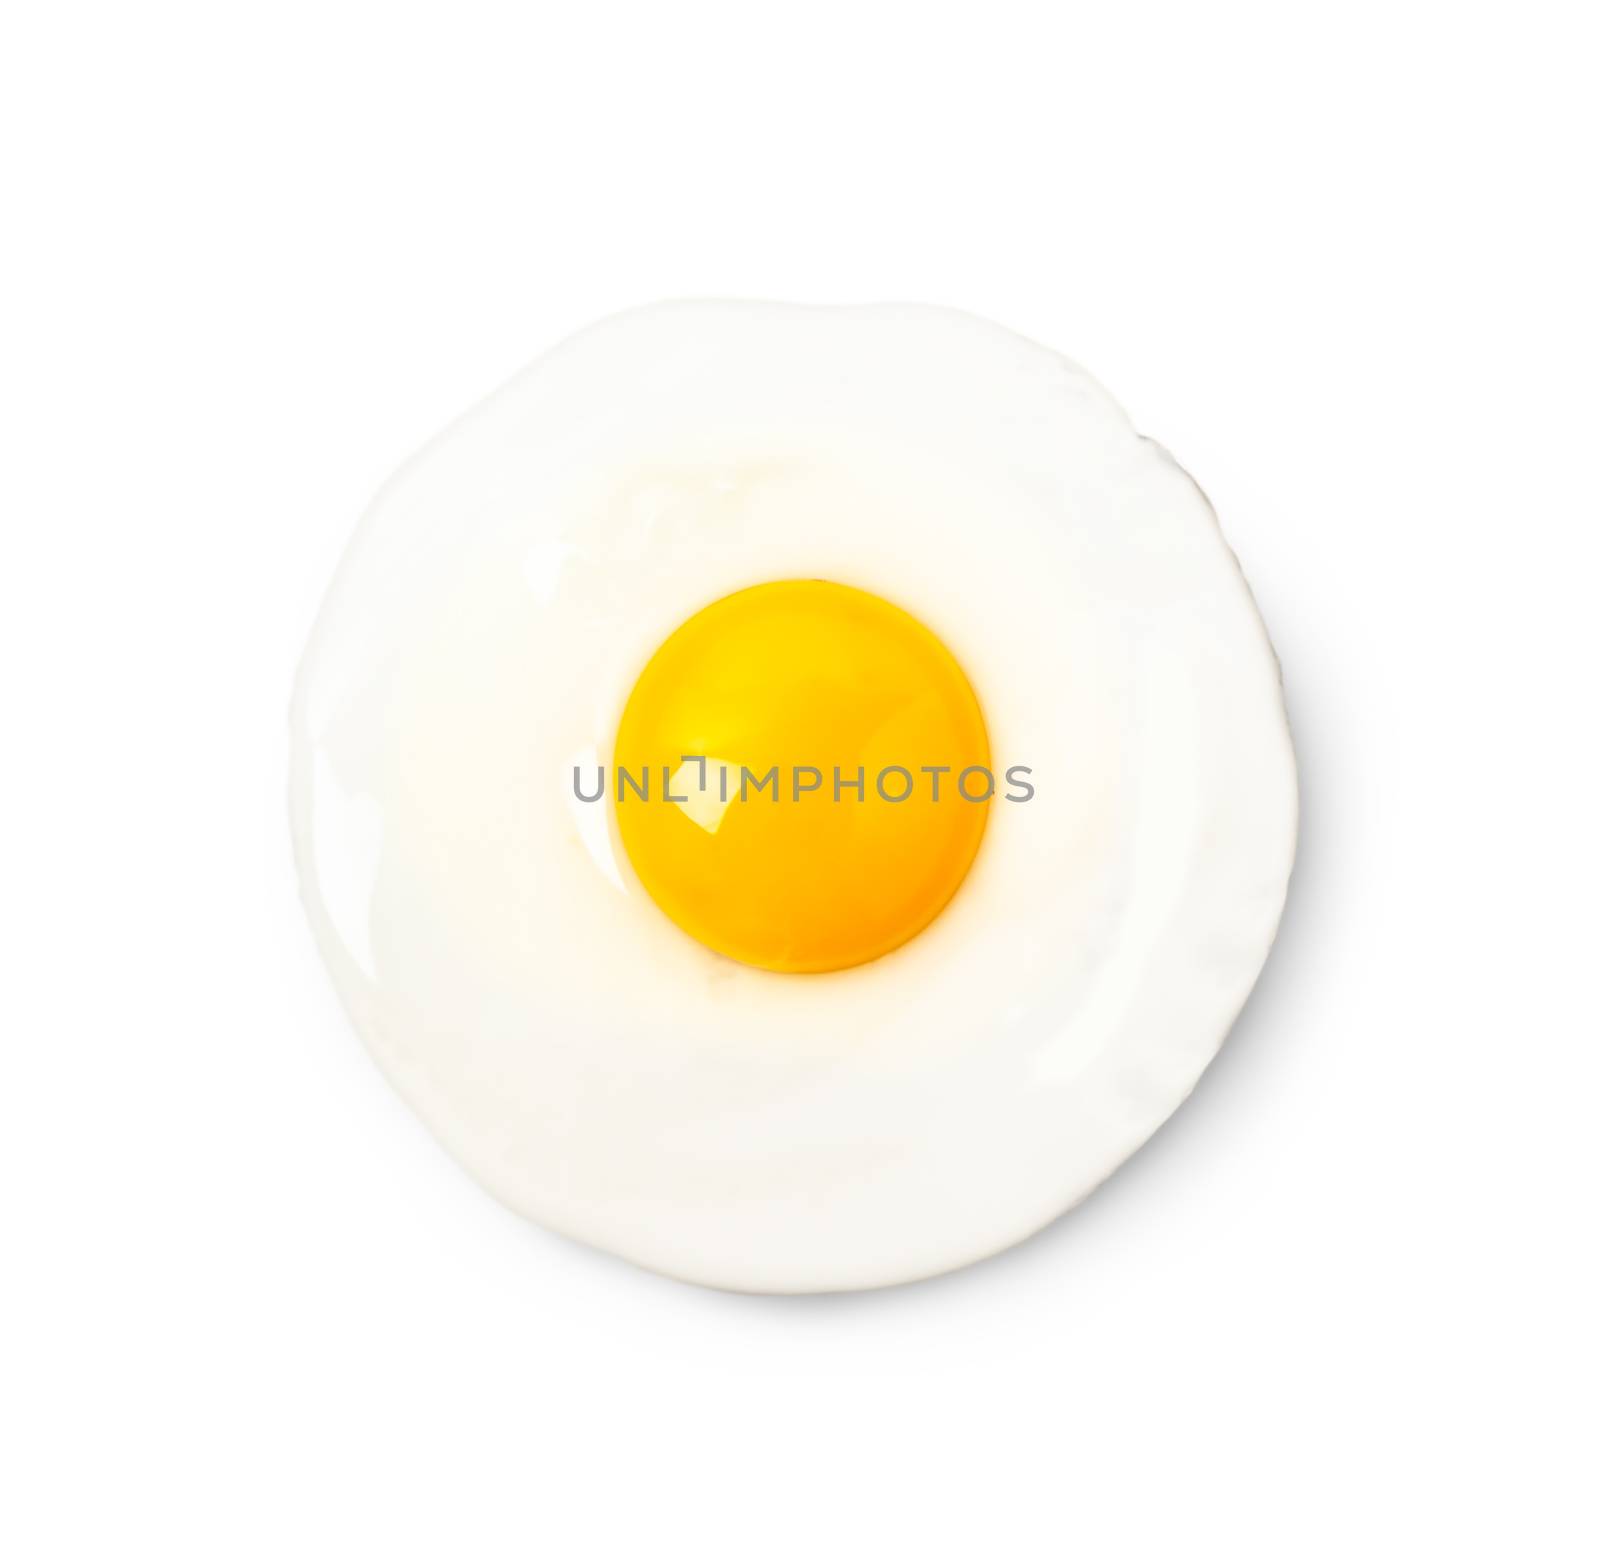 Fried egg isolated on white background closeup